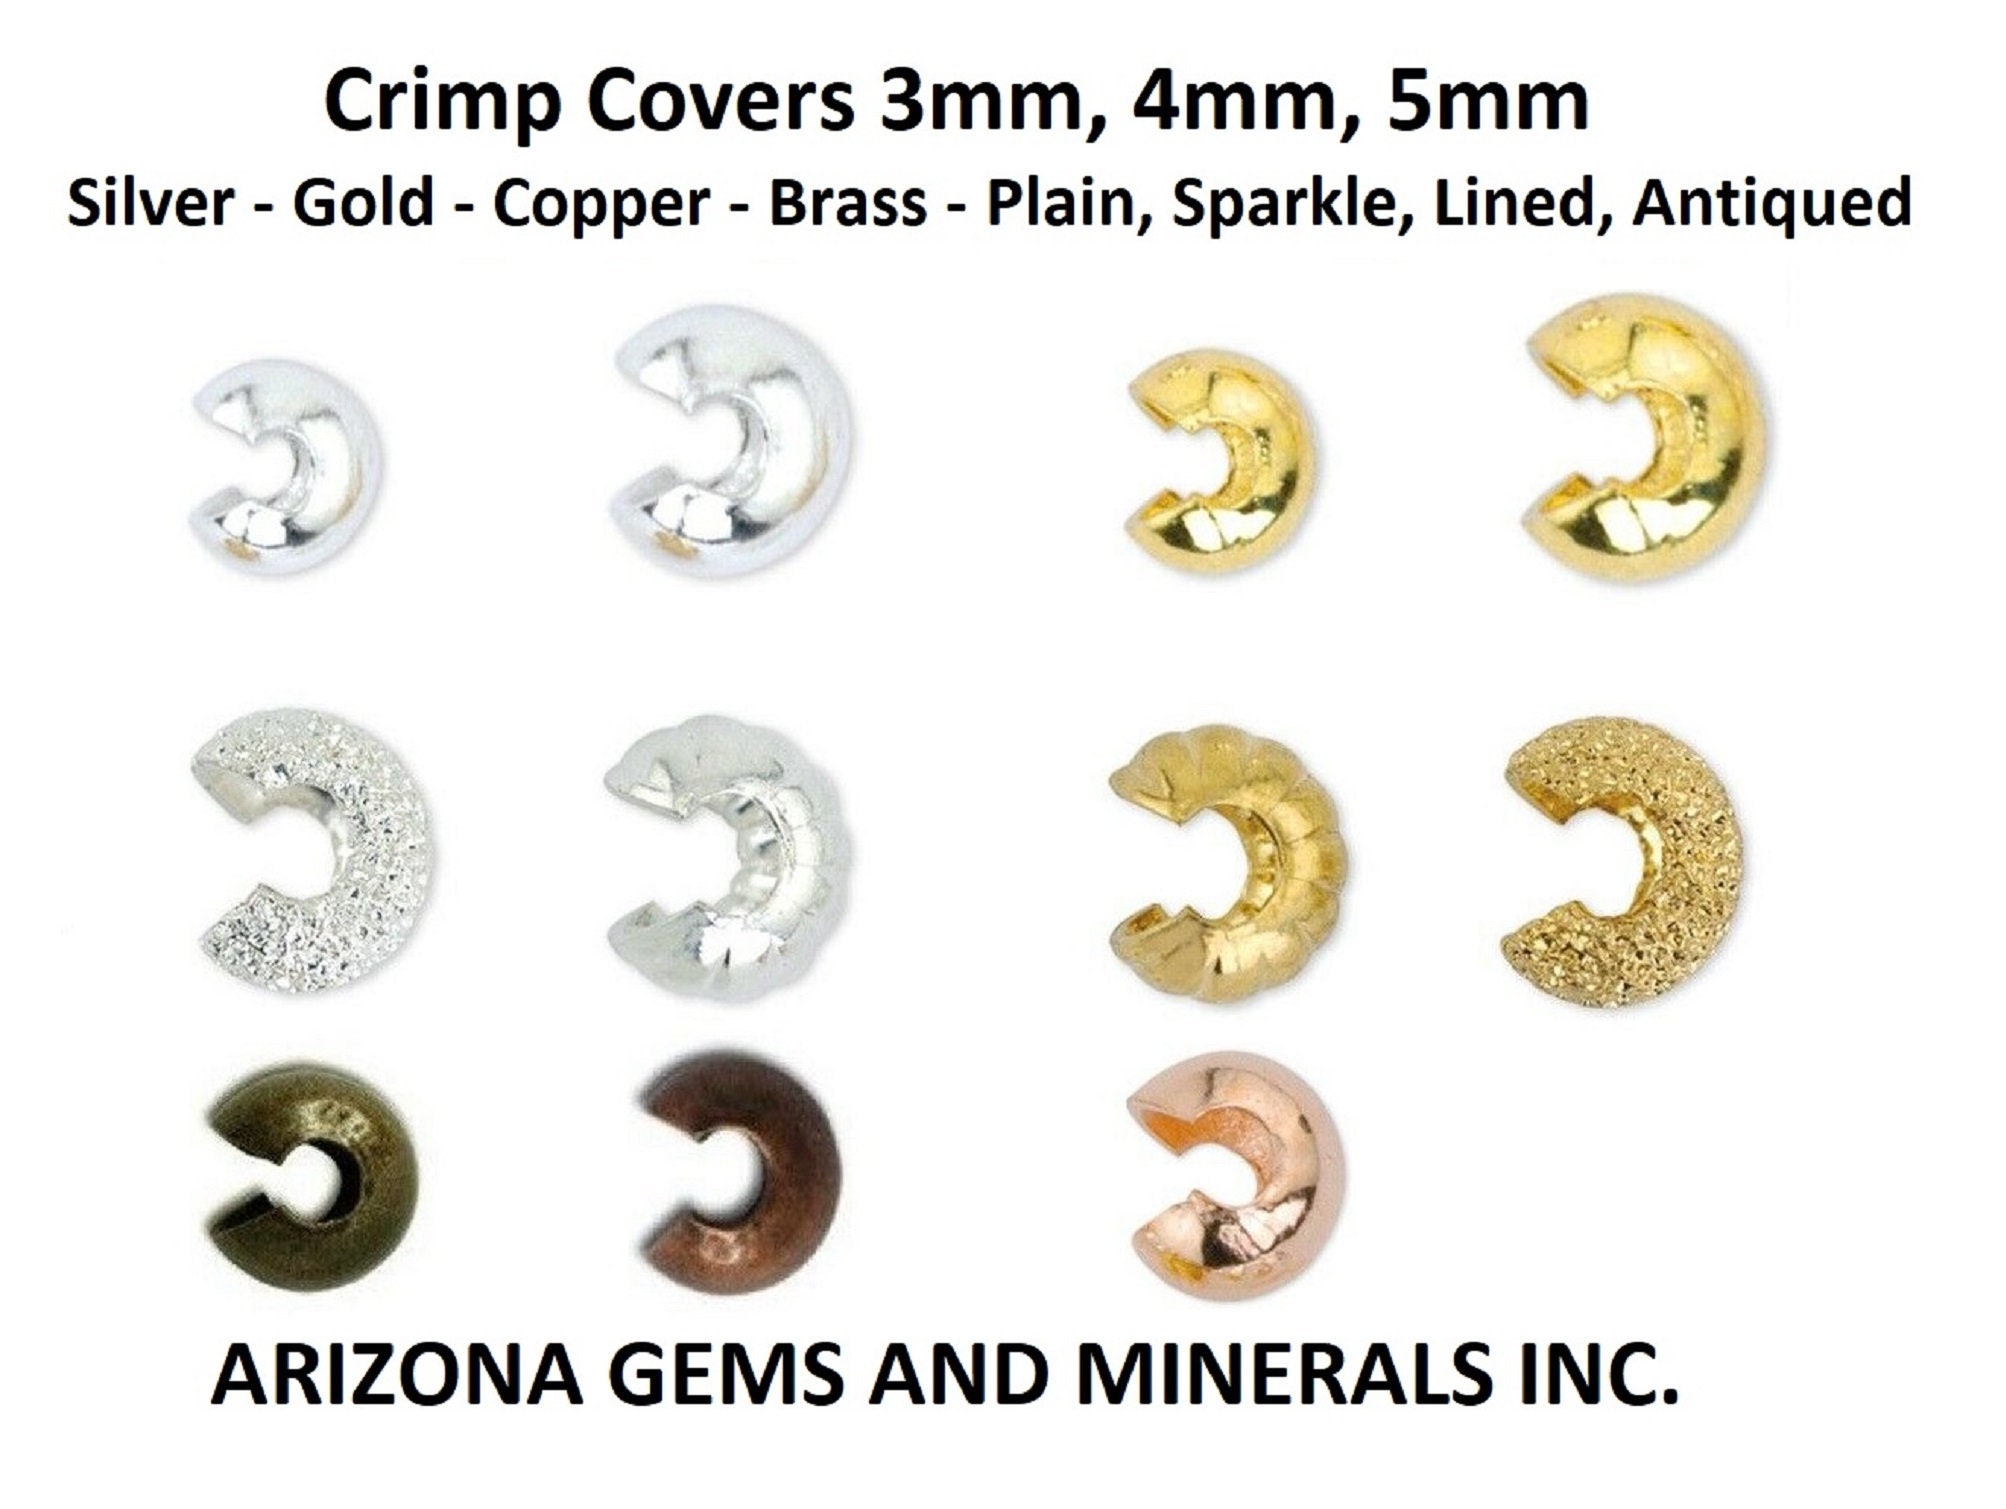 Sterling Silver 4mm Crimp Bead Covers, 4mm Crimp Covers, Silver Crimp Covers,  Packs of 20pc,50pc,or 100pcs 